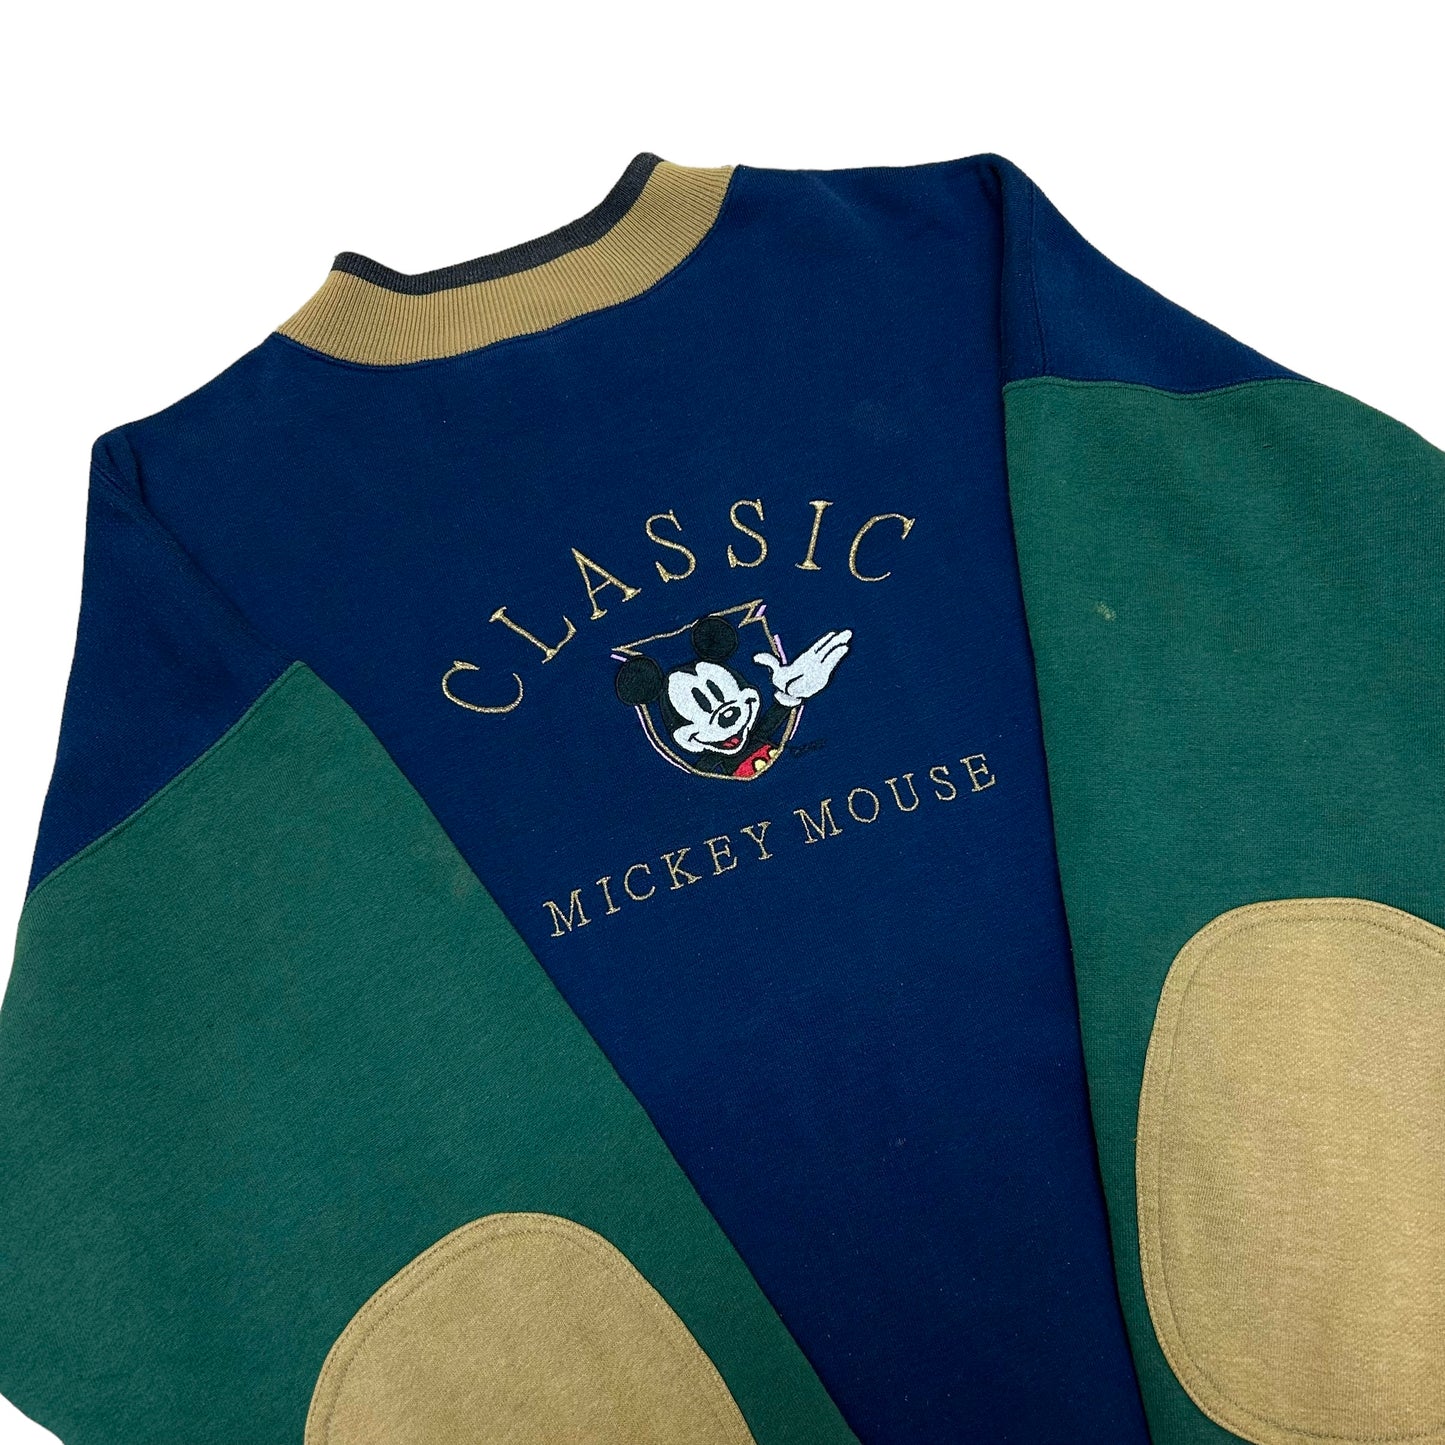 Vintage 1990s “Classic Mickey Mouse” Navy Blue Color-Block Crewneck Sweatshirt - Size XL